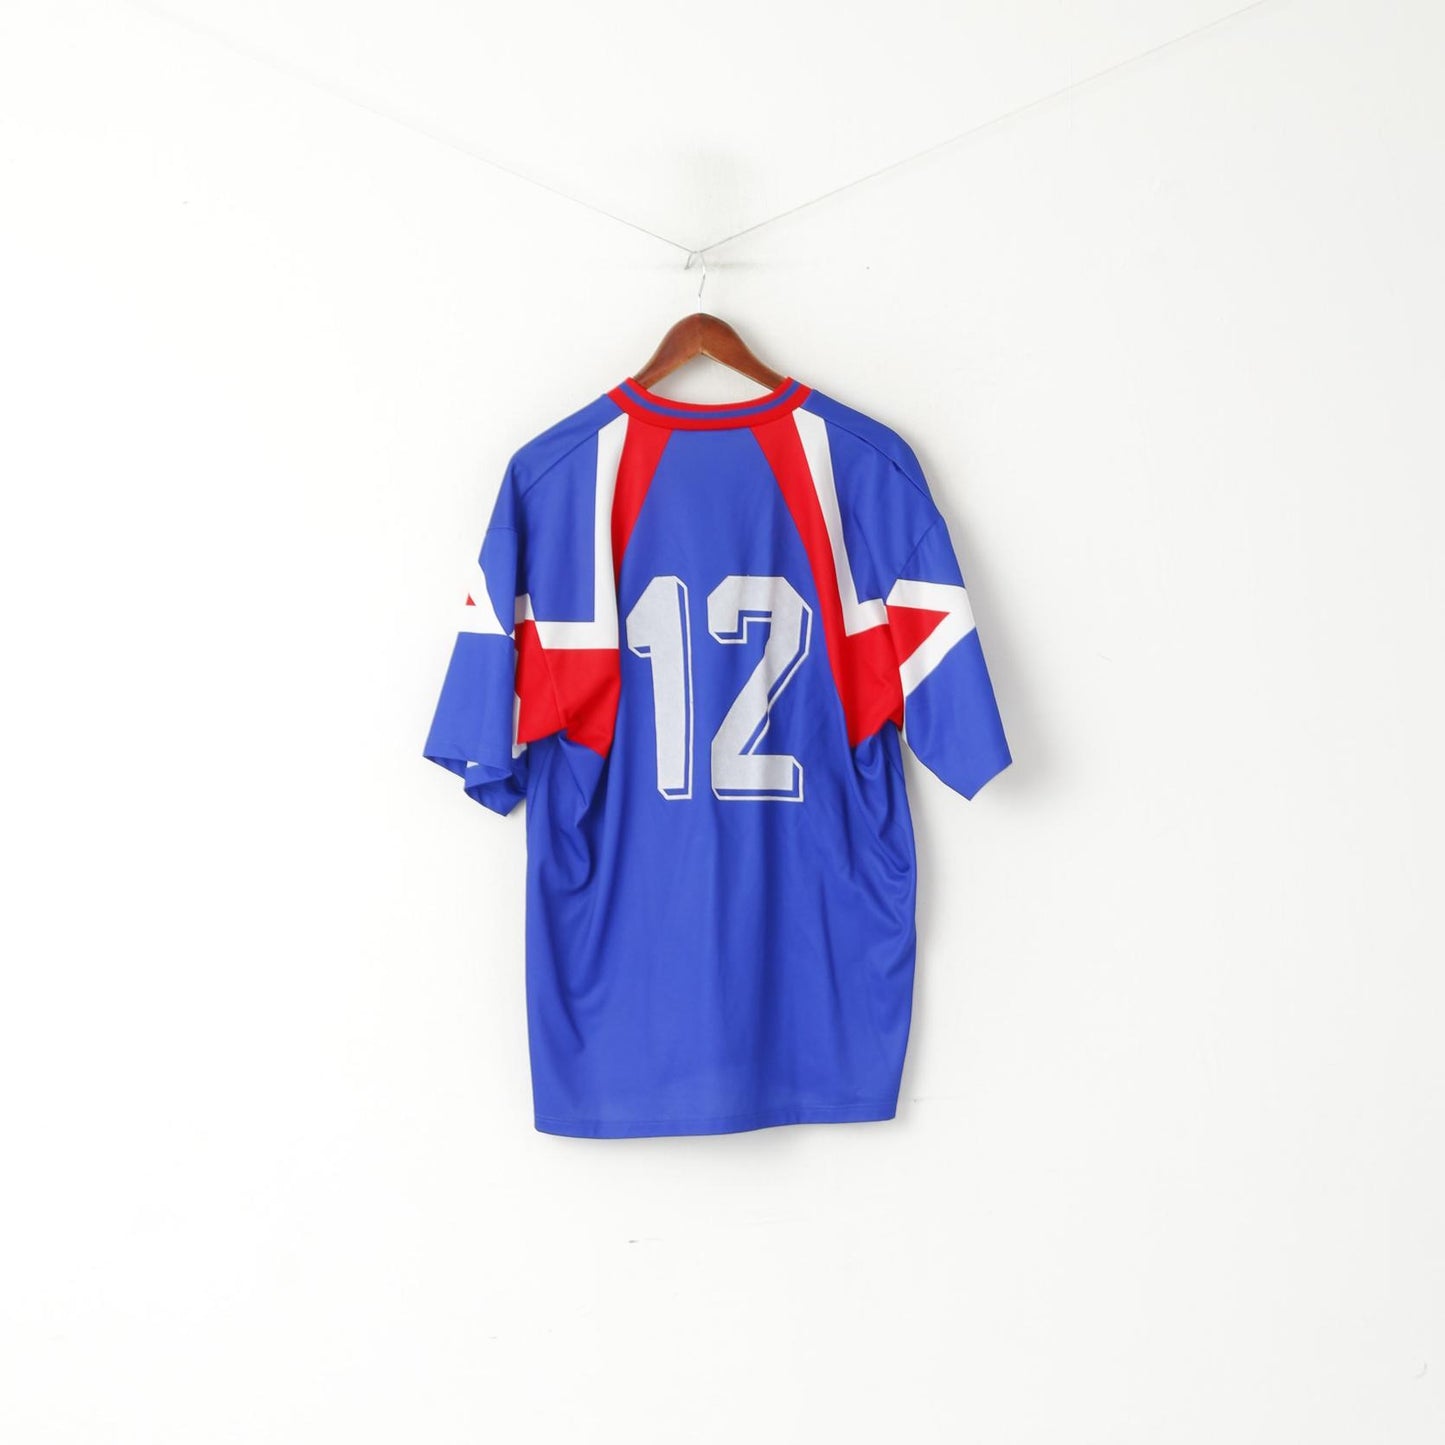 Erima Men L / XL Shirt Navy Blue Vintage V Neck Sport Football #12 Active Top